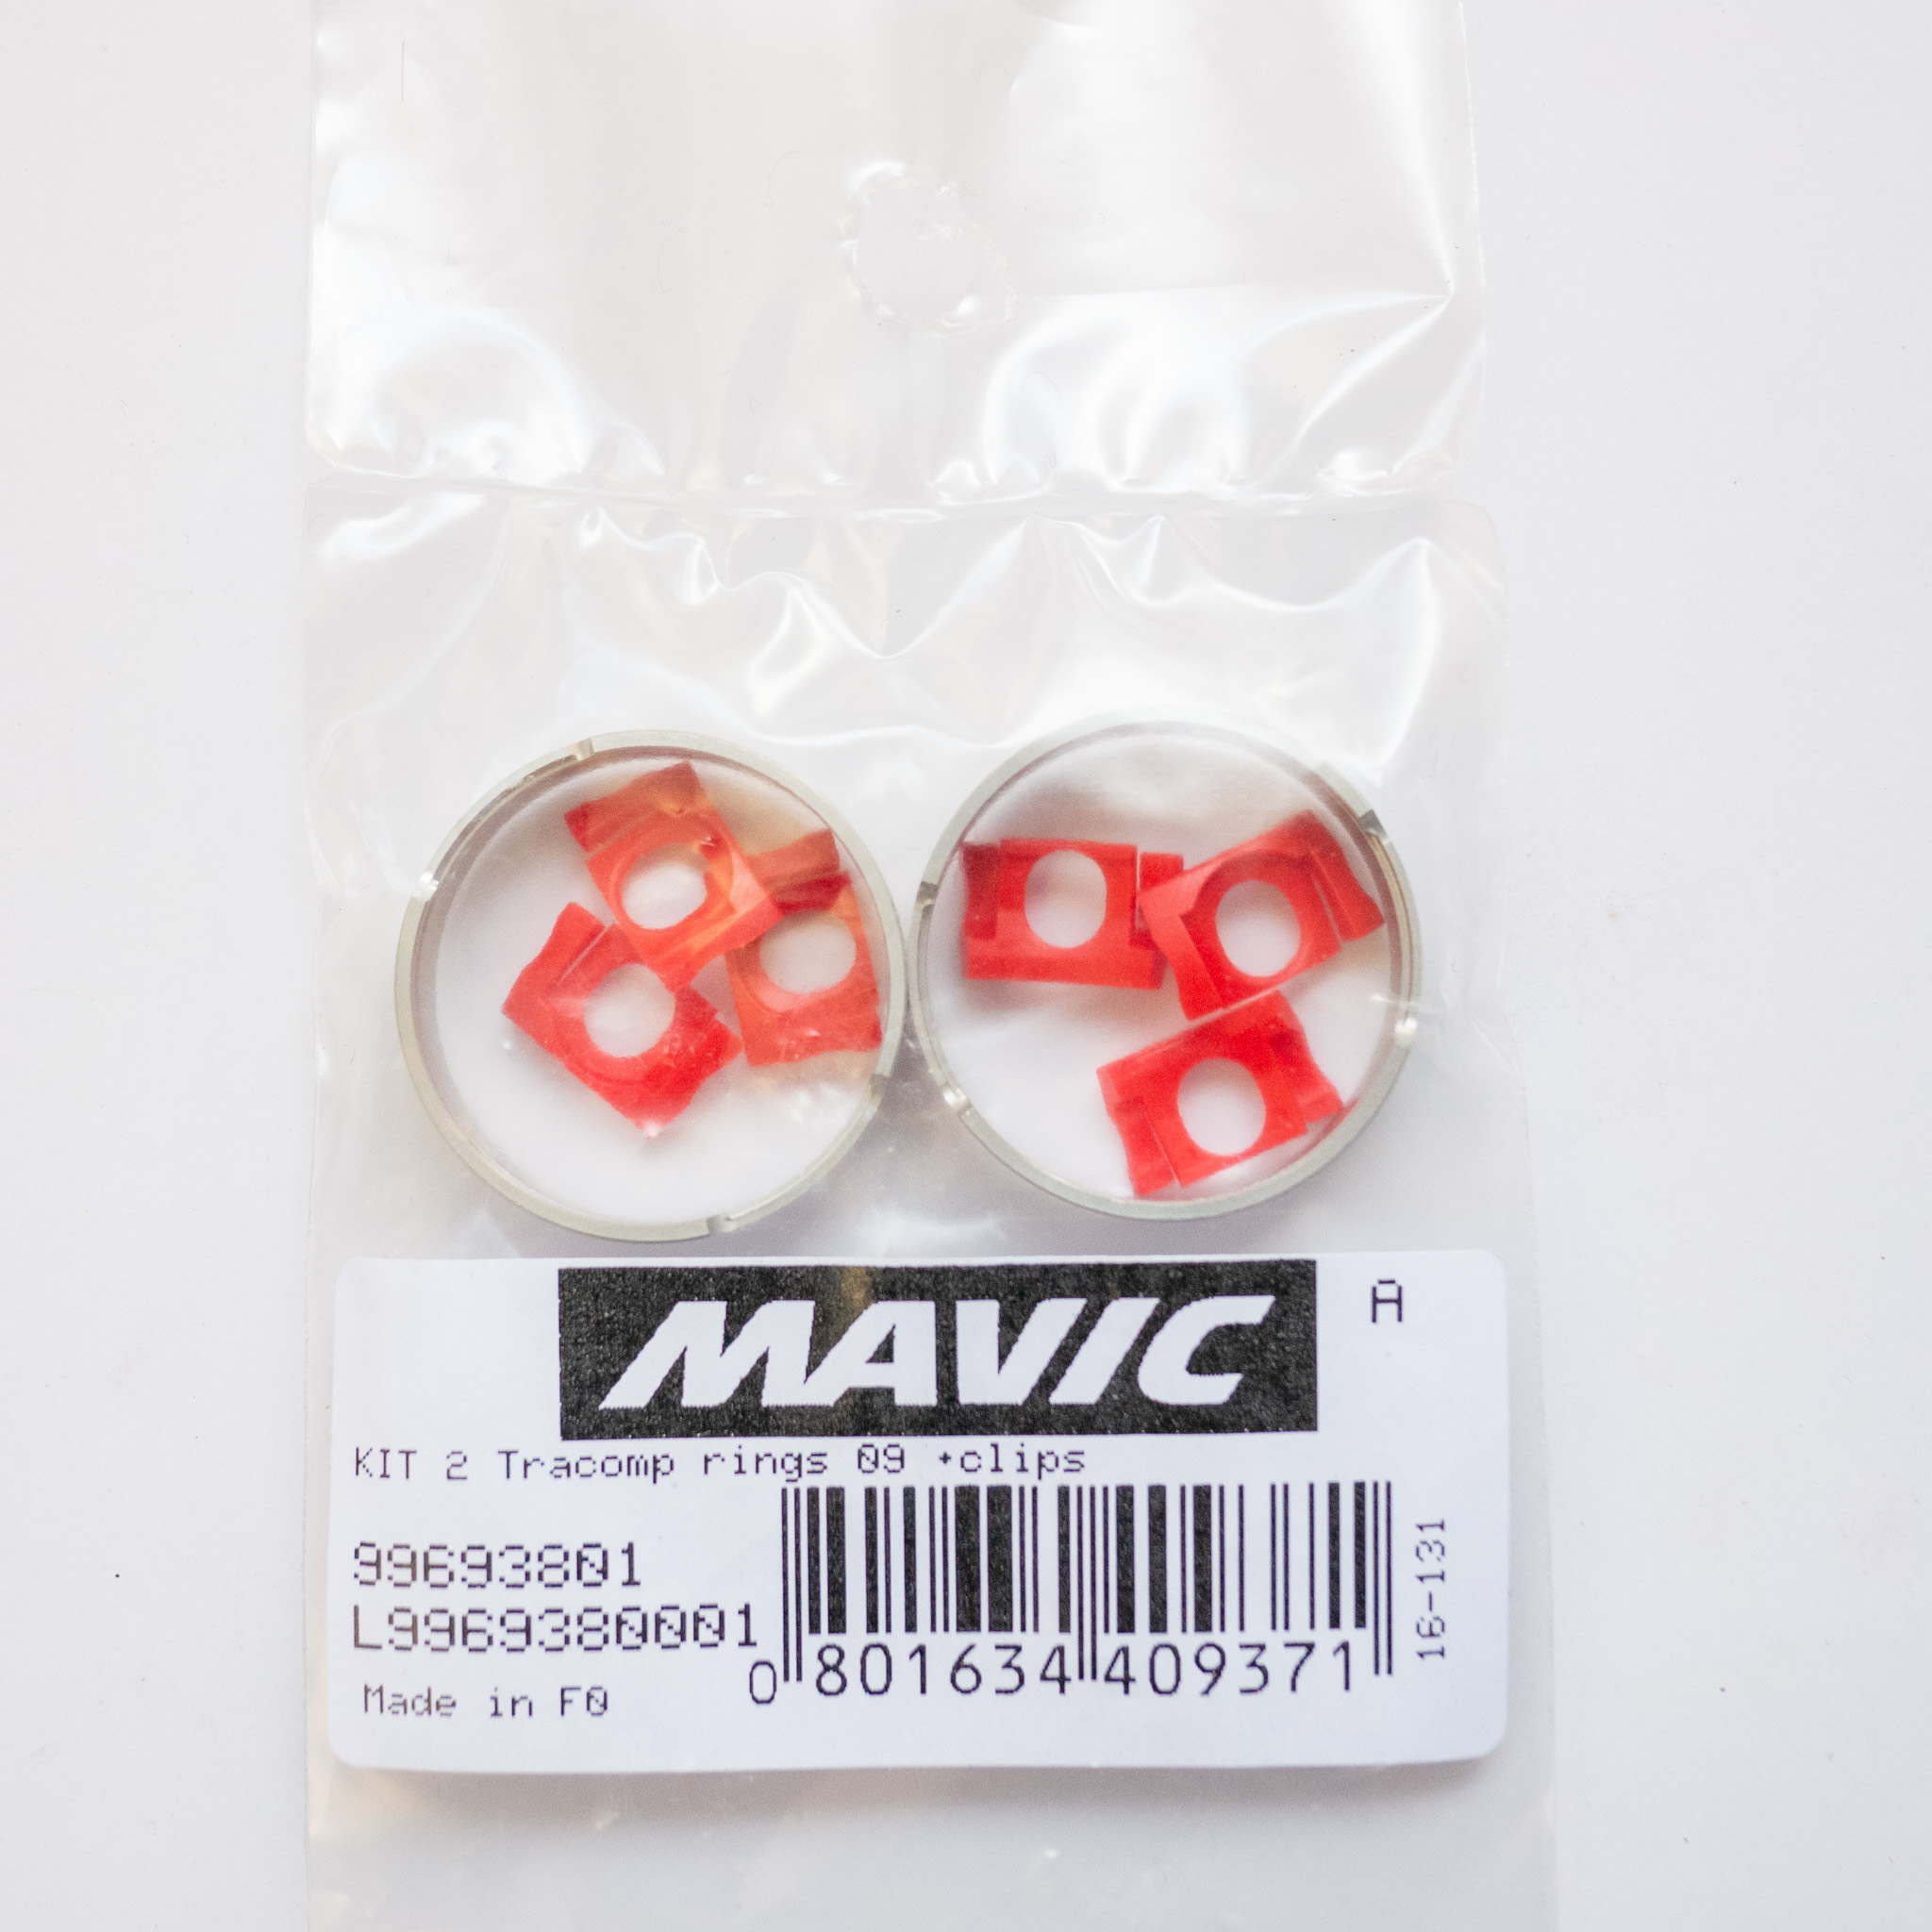 MAVIC　Kit 2 Tracomp rings 09 +clips(L99693800)